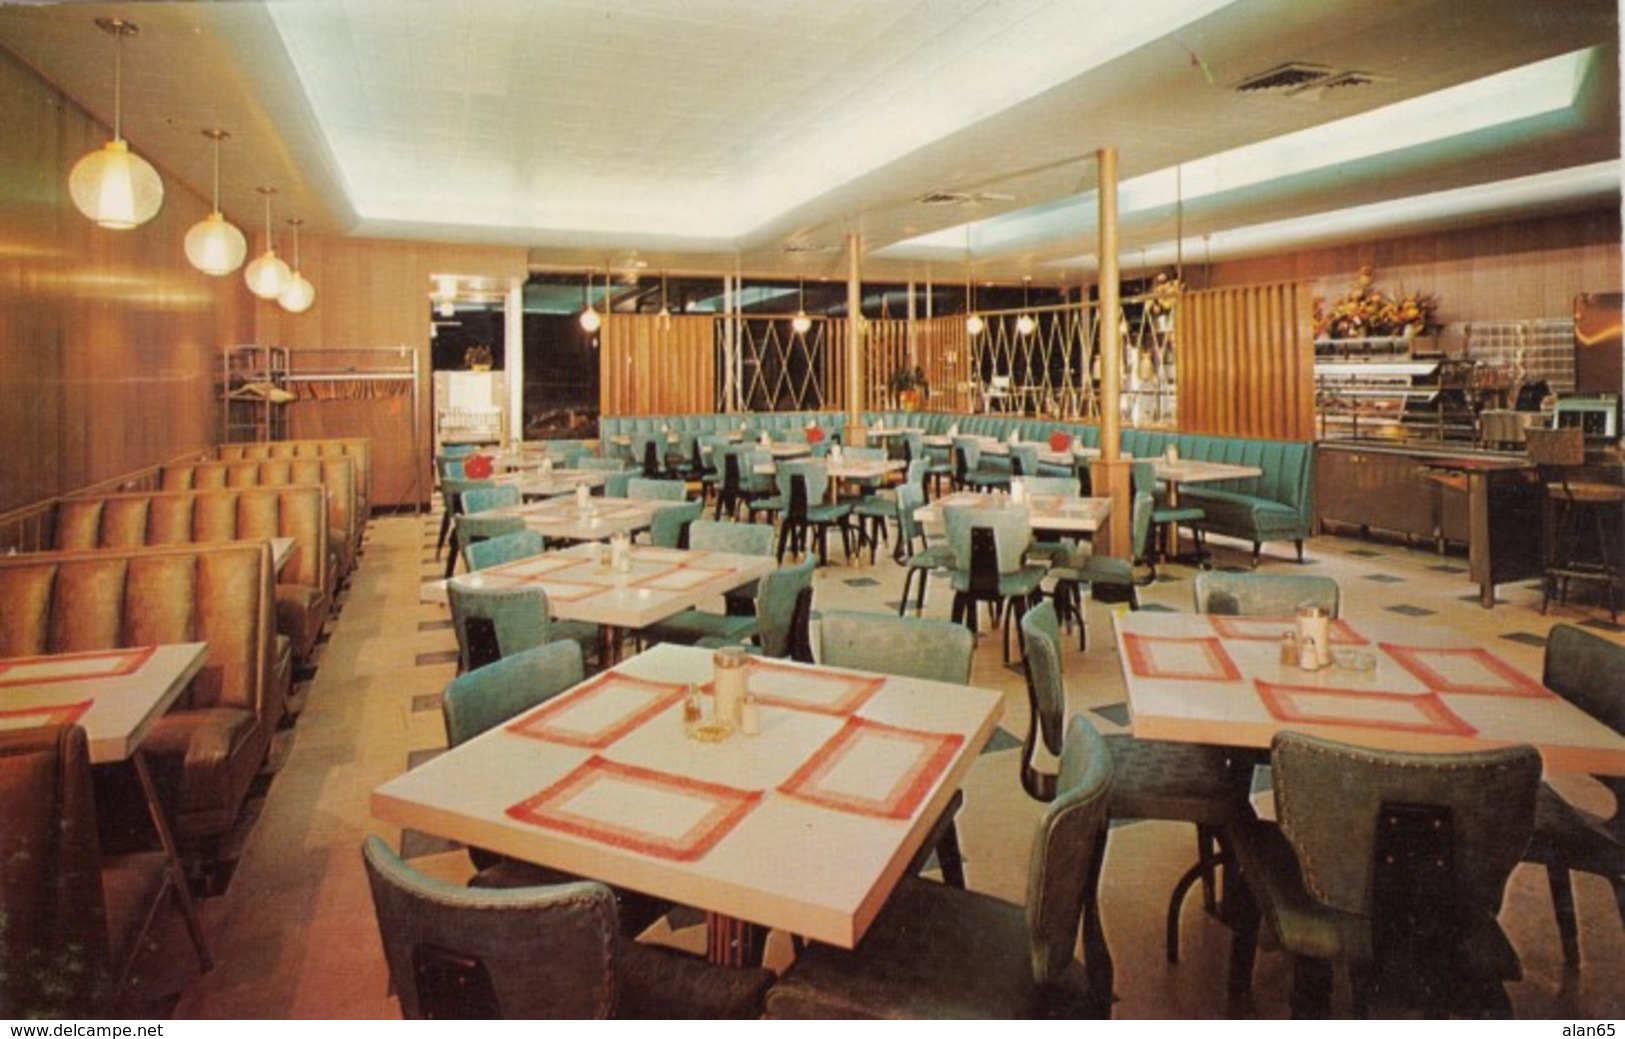 Detroit Michigan, Petco Bar-B-Q Barbeque Restaurant Interior View, C1950s Vintage Postcard - Detroit